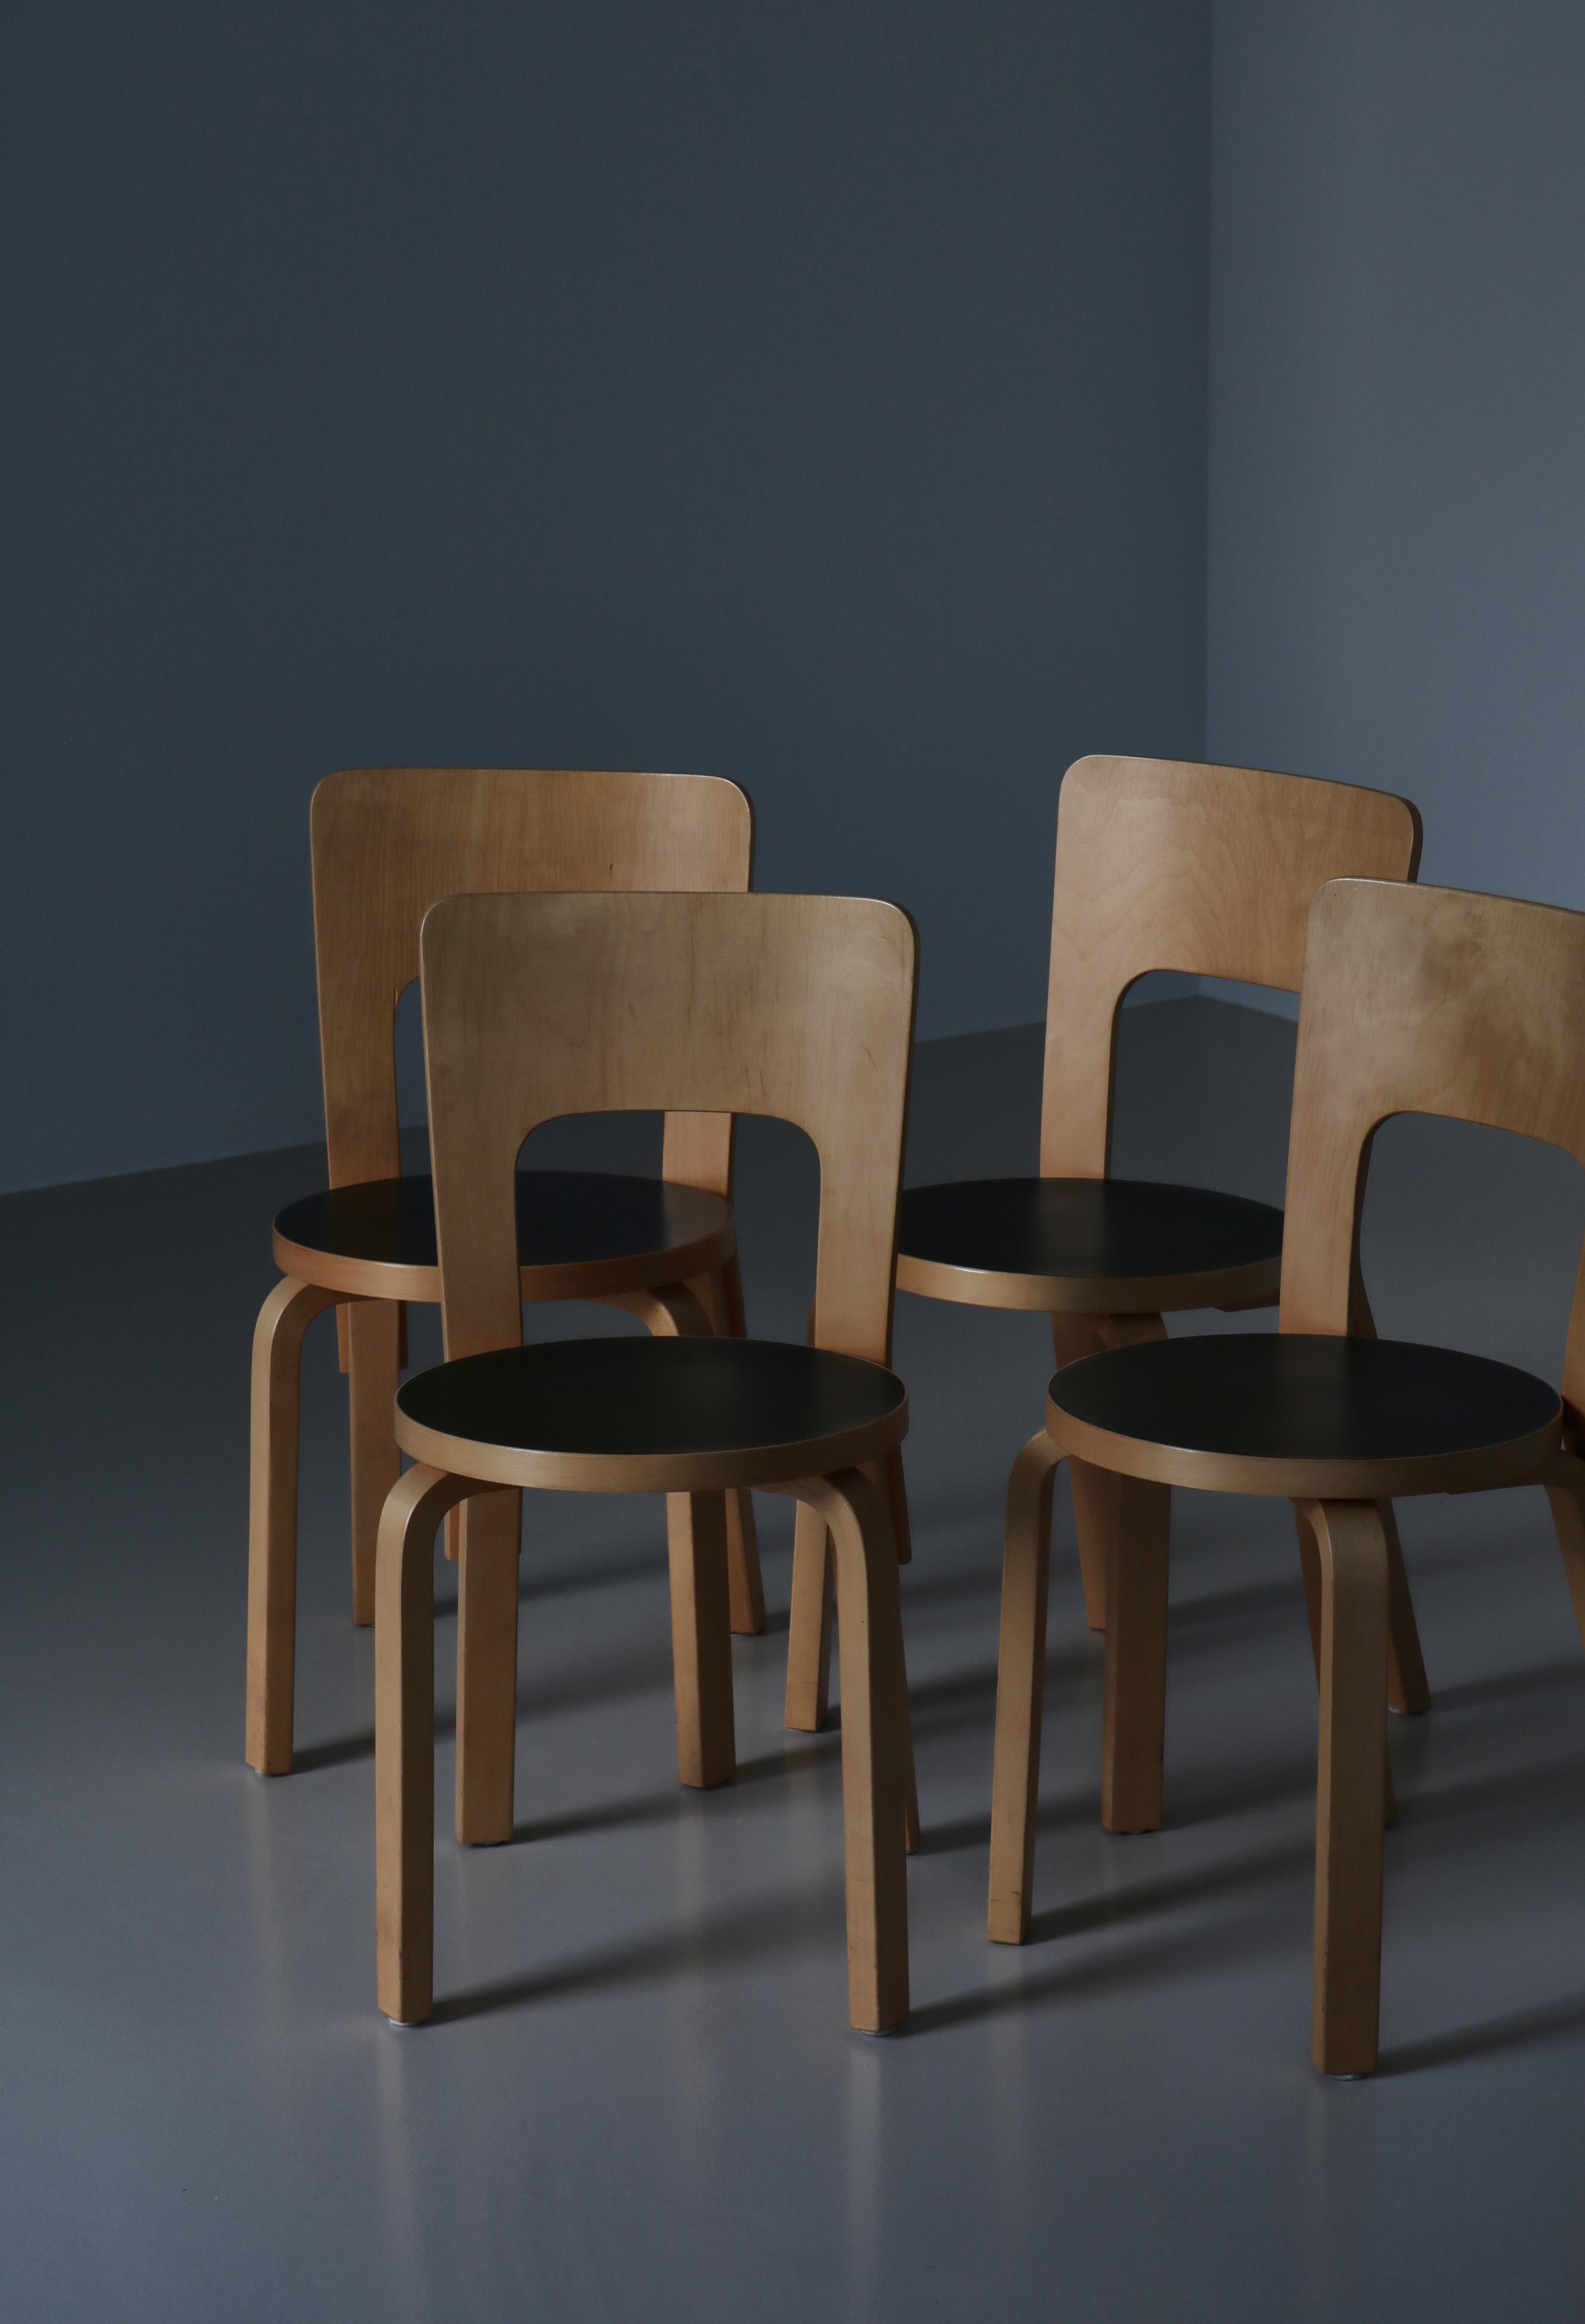 Set of 4 Vintage Alvar Aalto Model 66 Chairs by Artek in Laminated Birch, 1960s For Sale 8